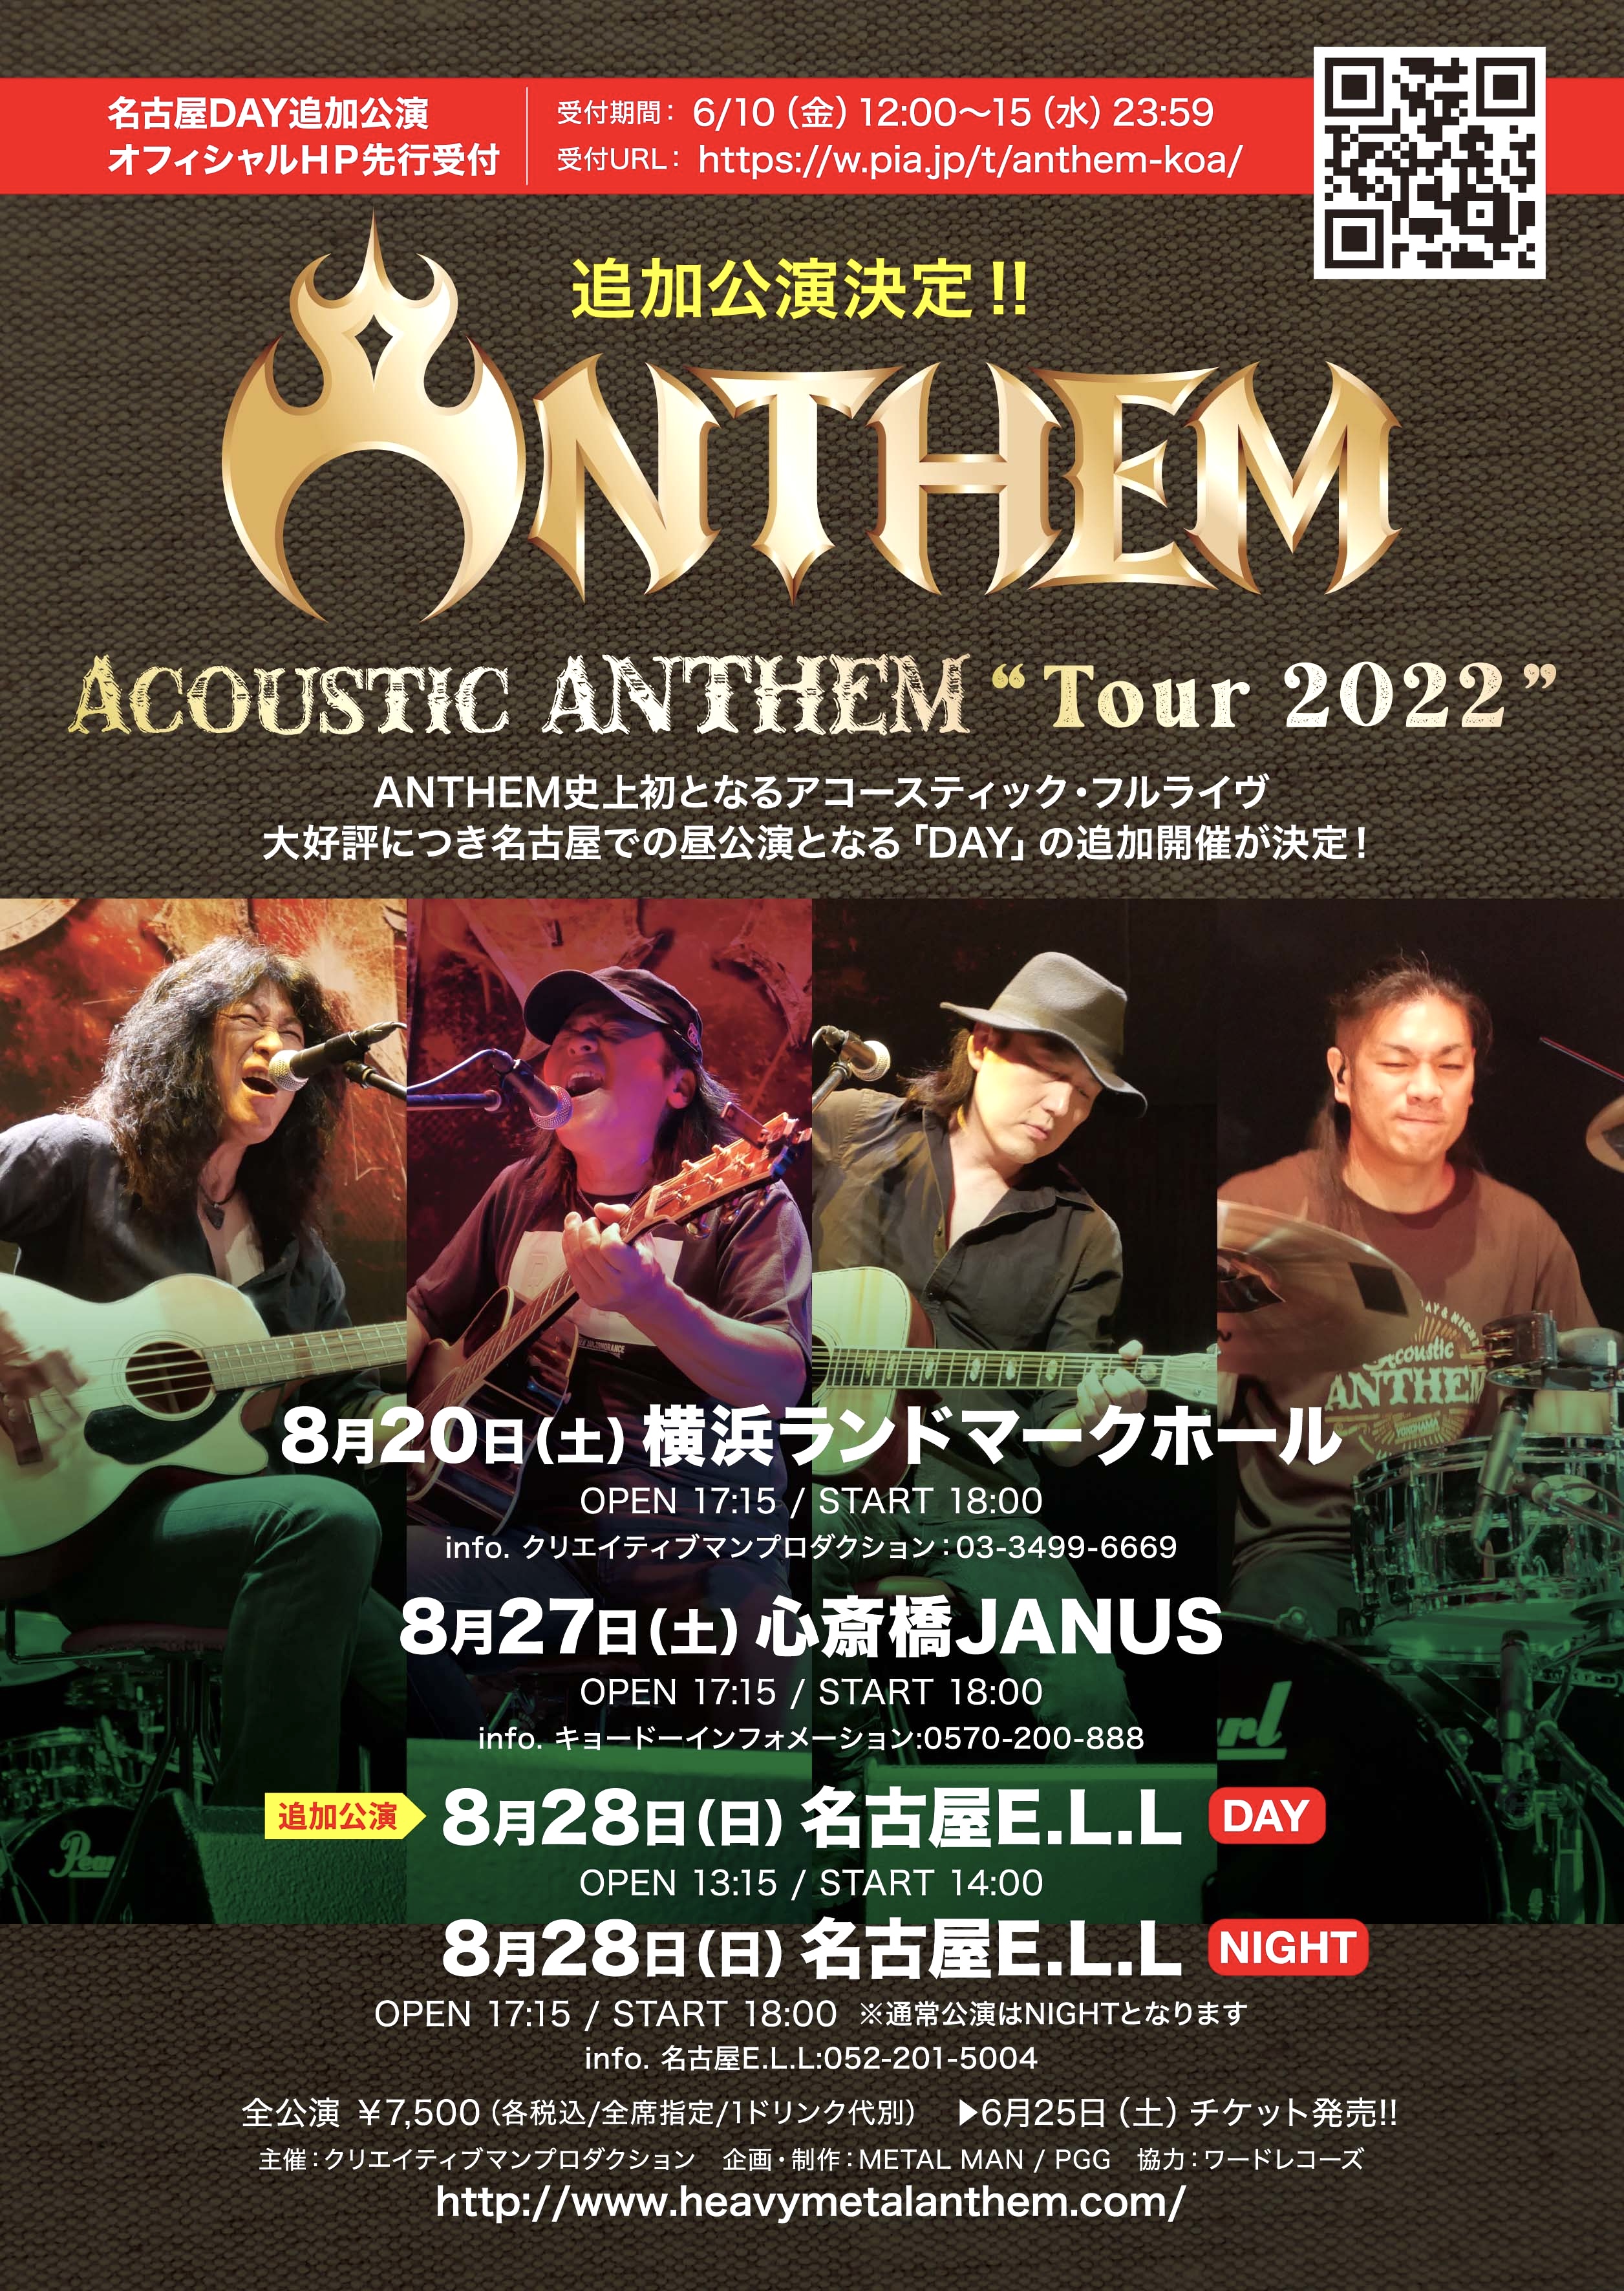 ACOUSTIC ANTHEM “Tour 2022” DAY公演 [愛知]